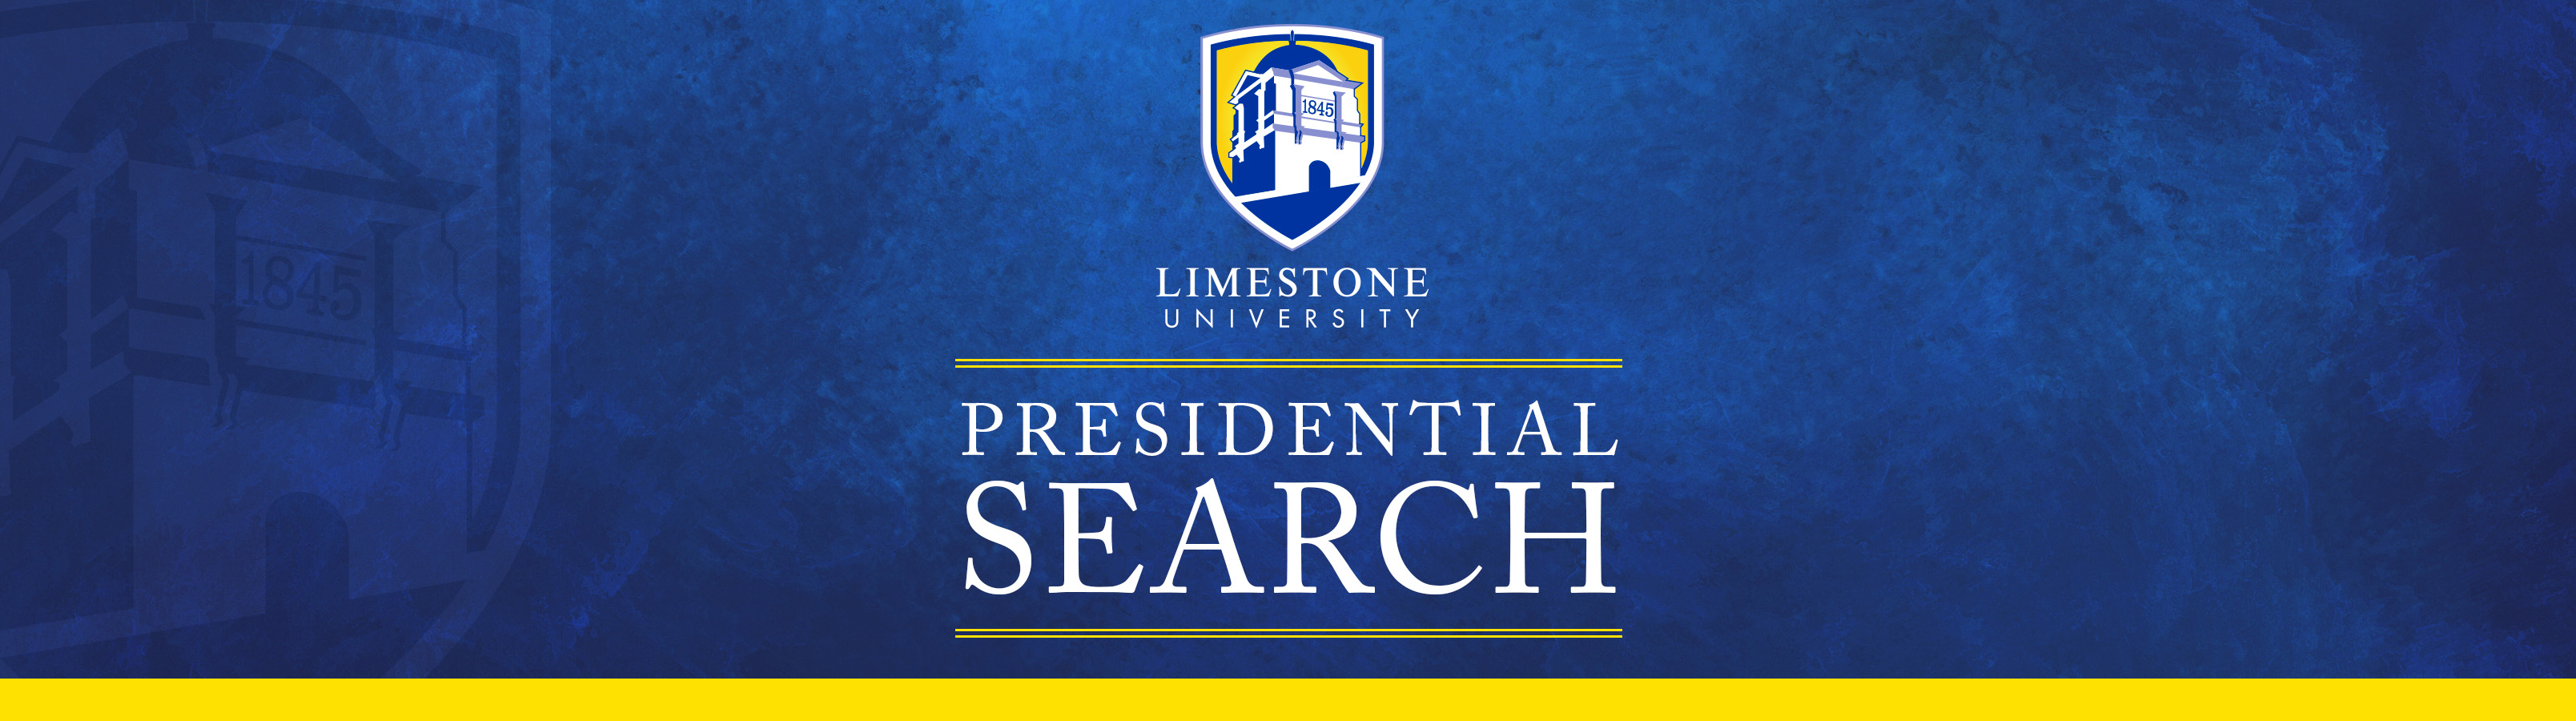 Presidential Search Limestone University